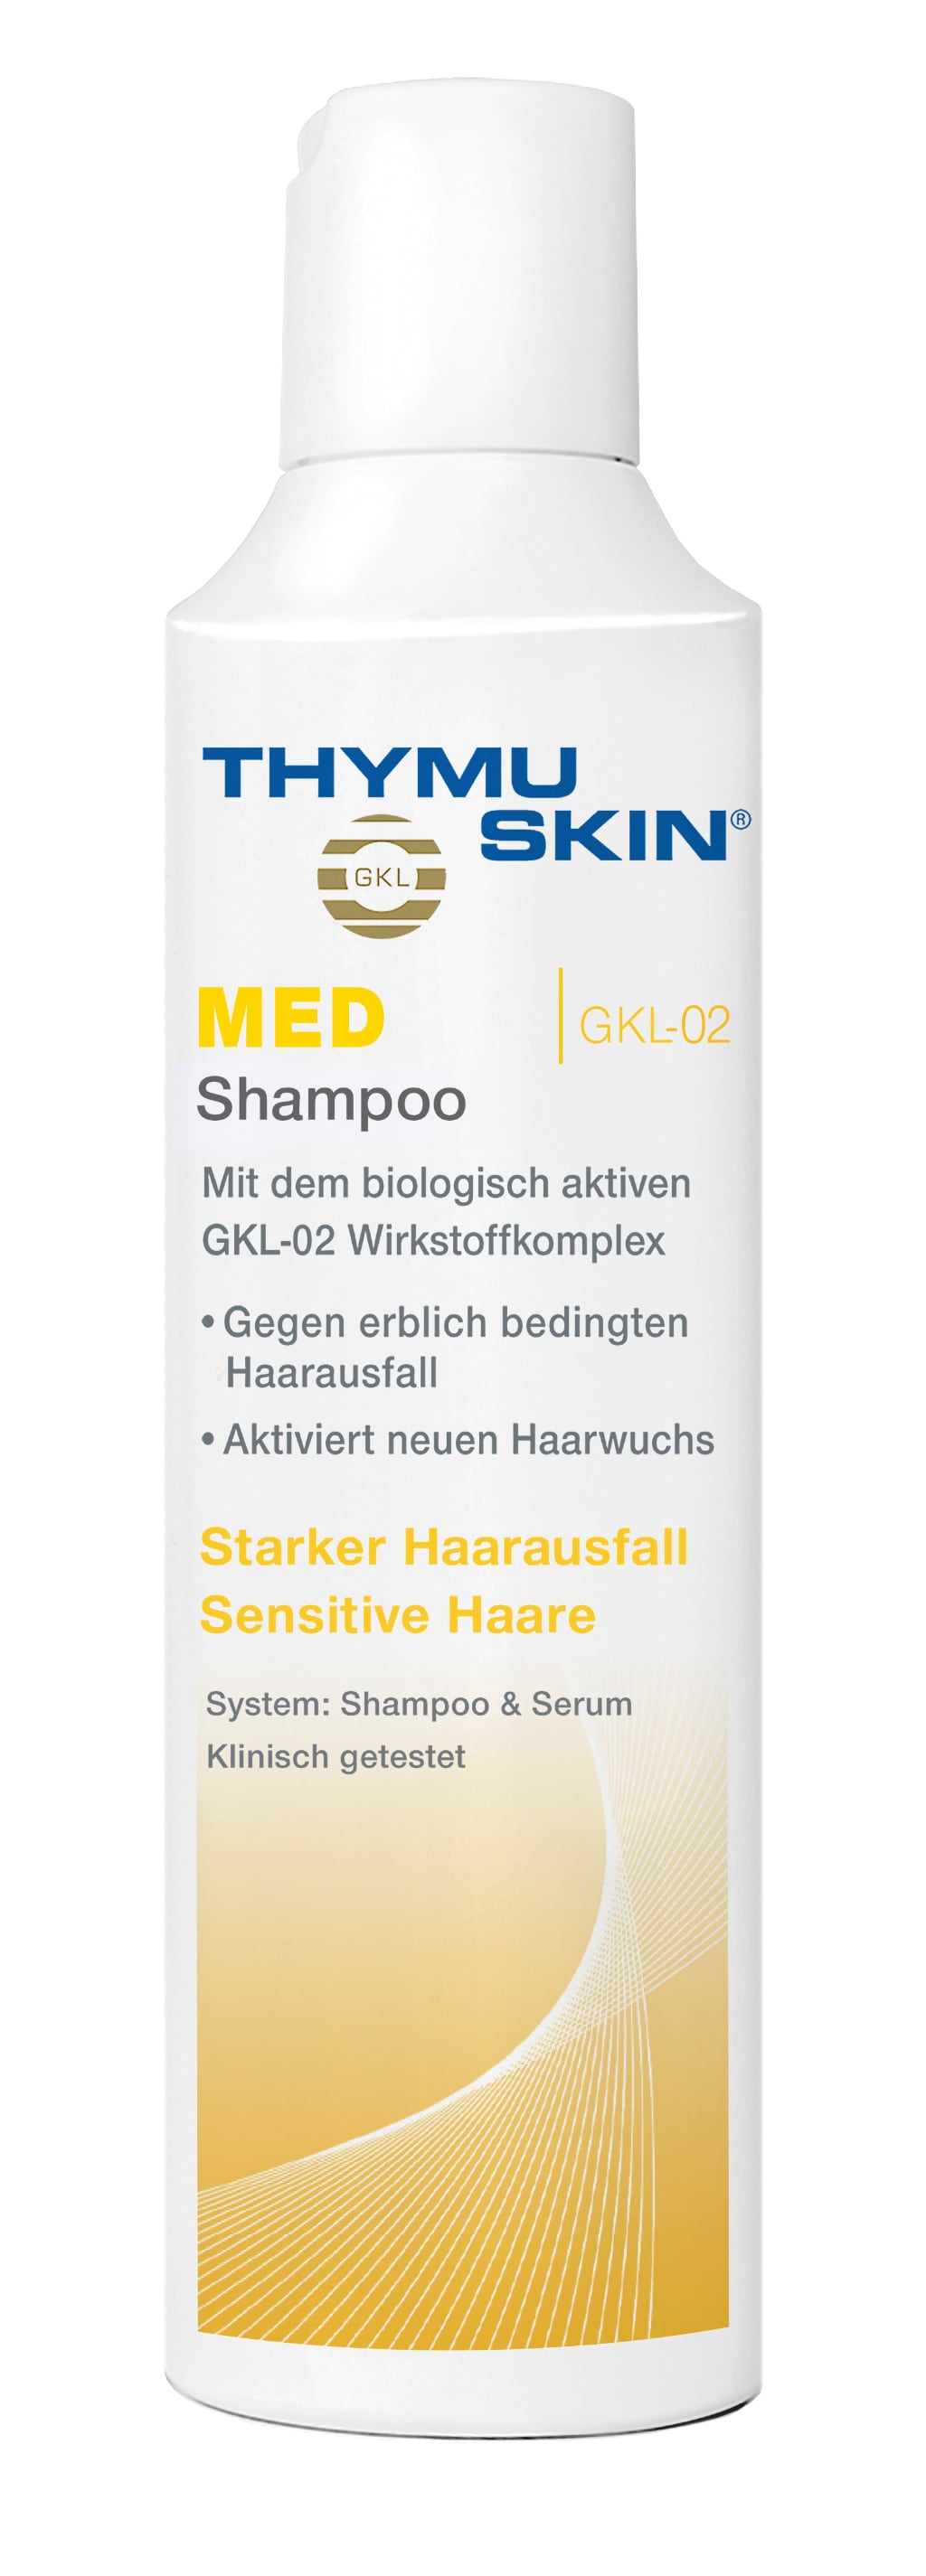 Thymuskin Med Shampoo